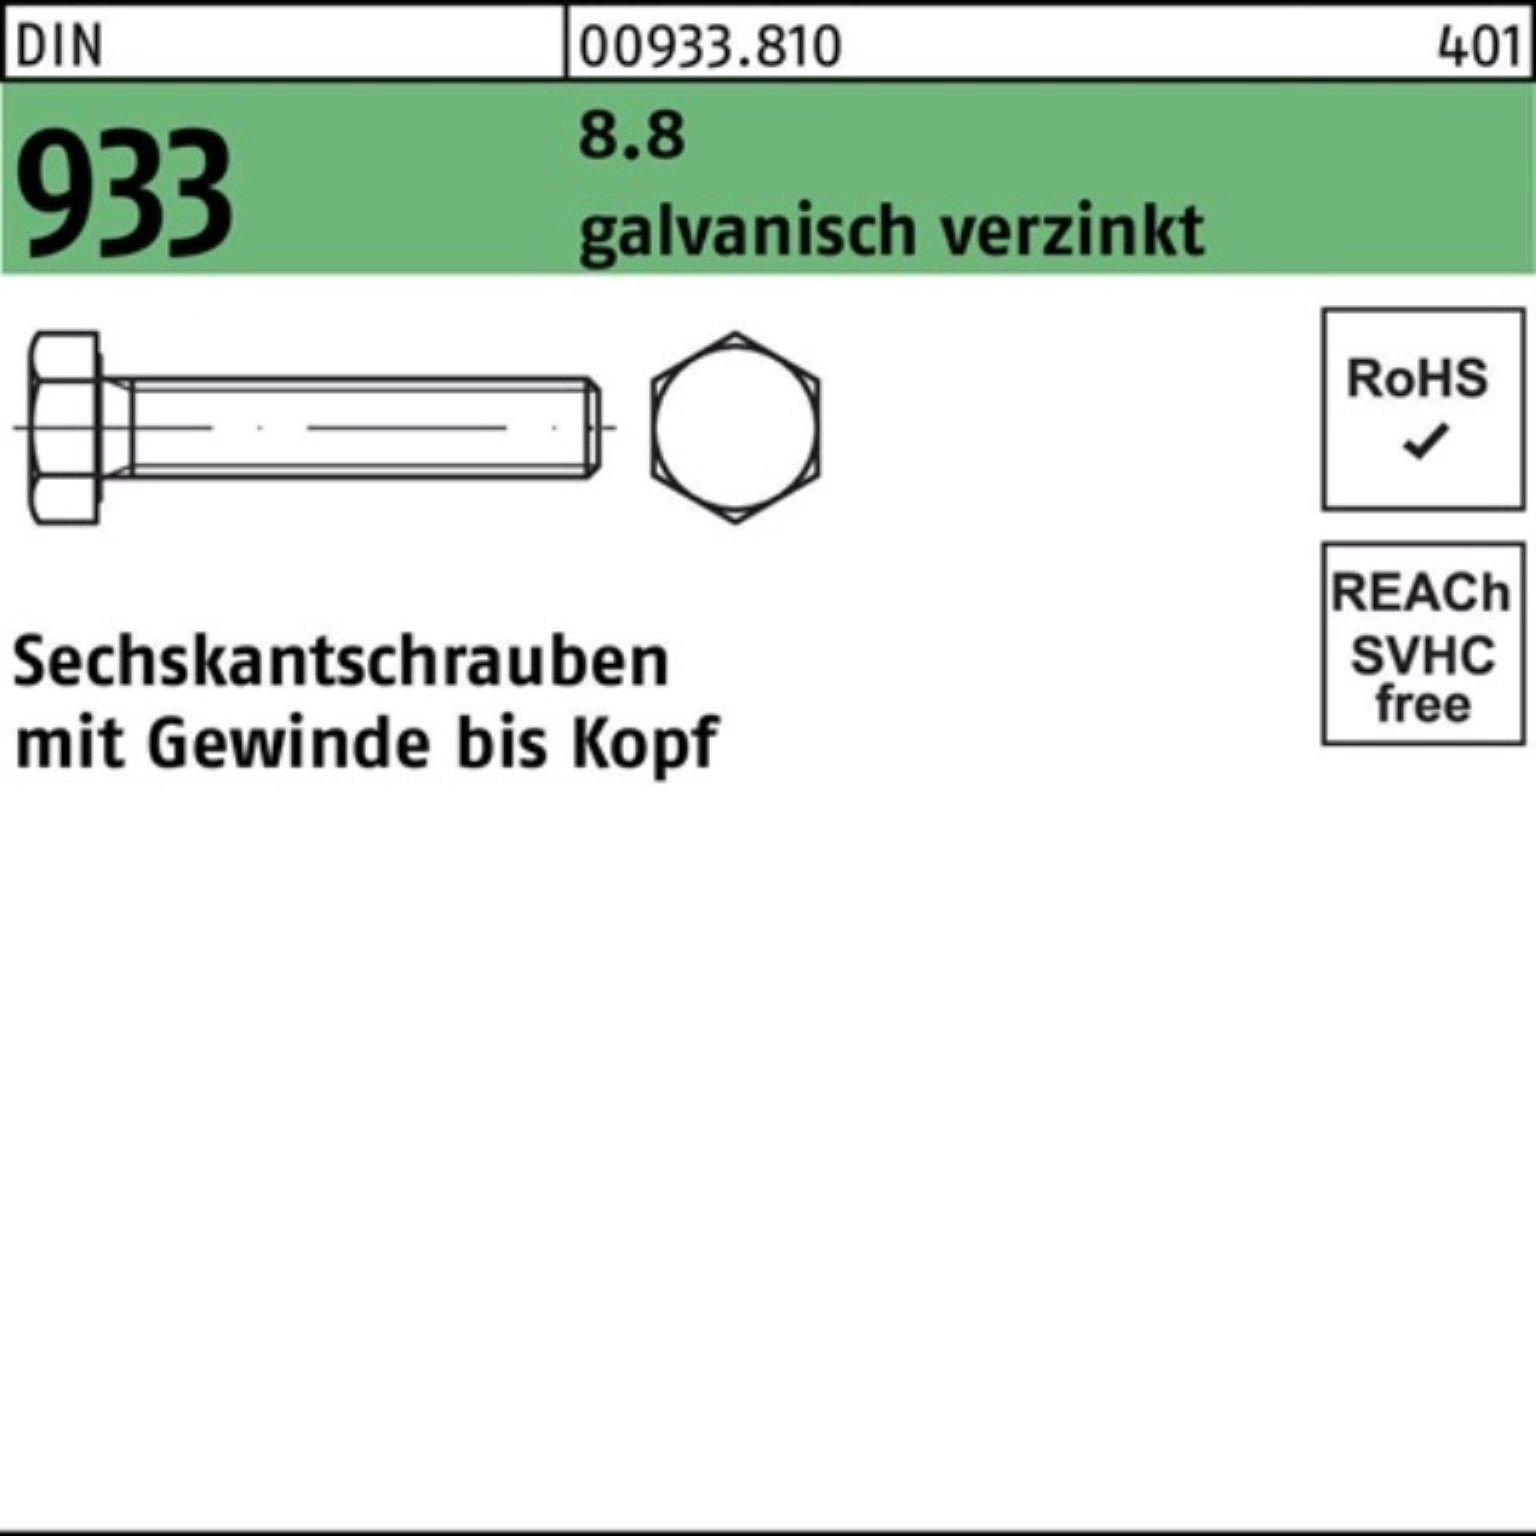 Reyher Sechskantschraube 100er Sechskantschraube 933 galv.verz. VG M16x St 25 DIN 8.8 190 Pack